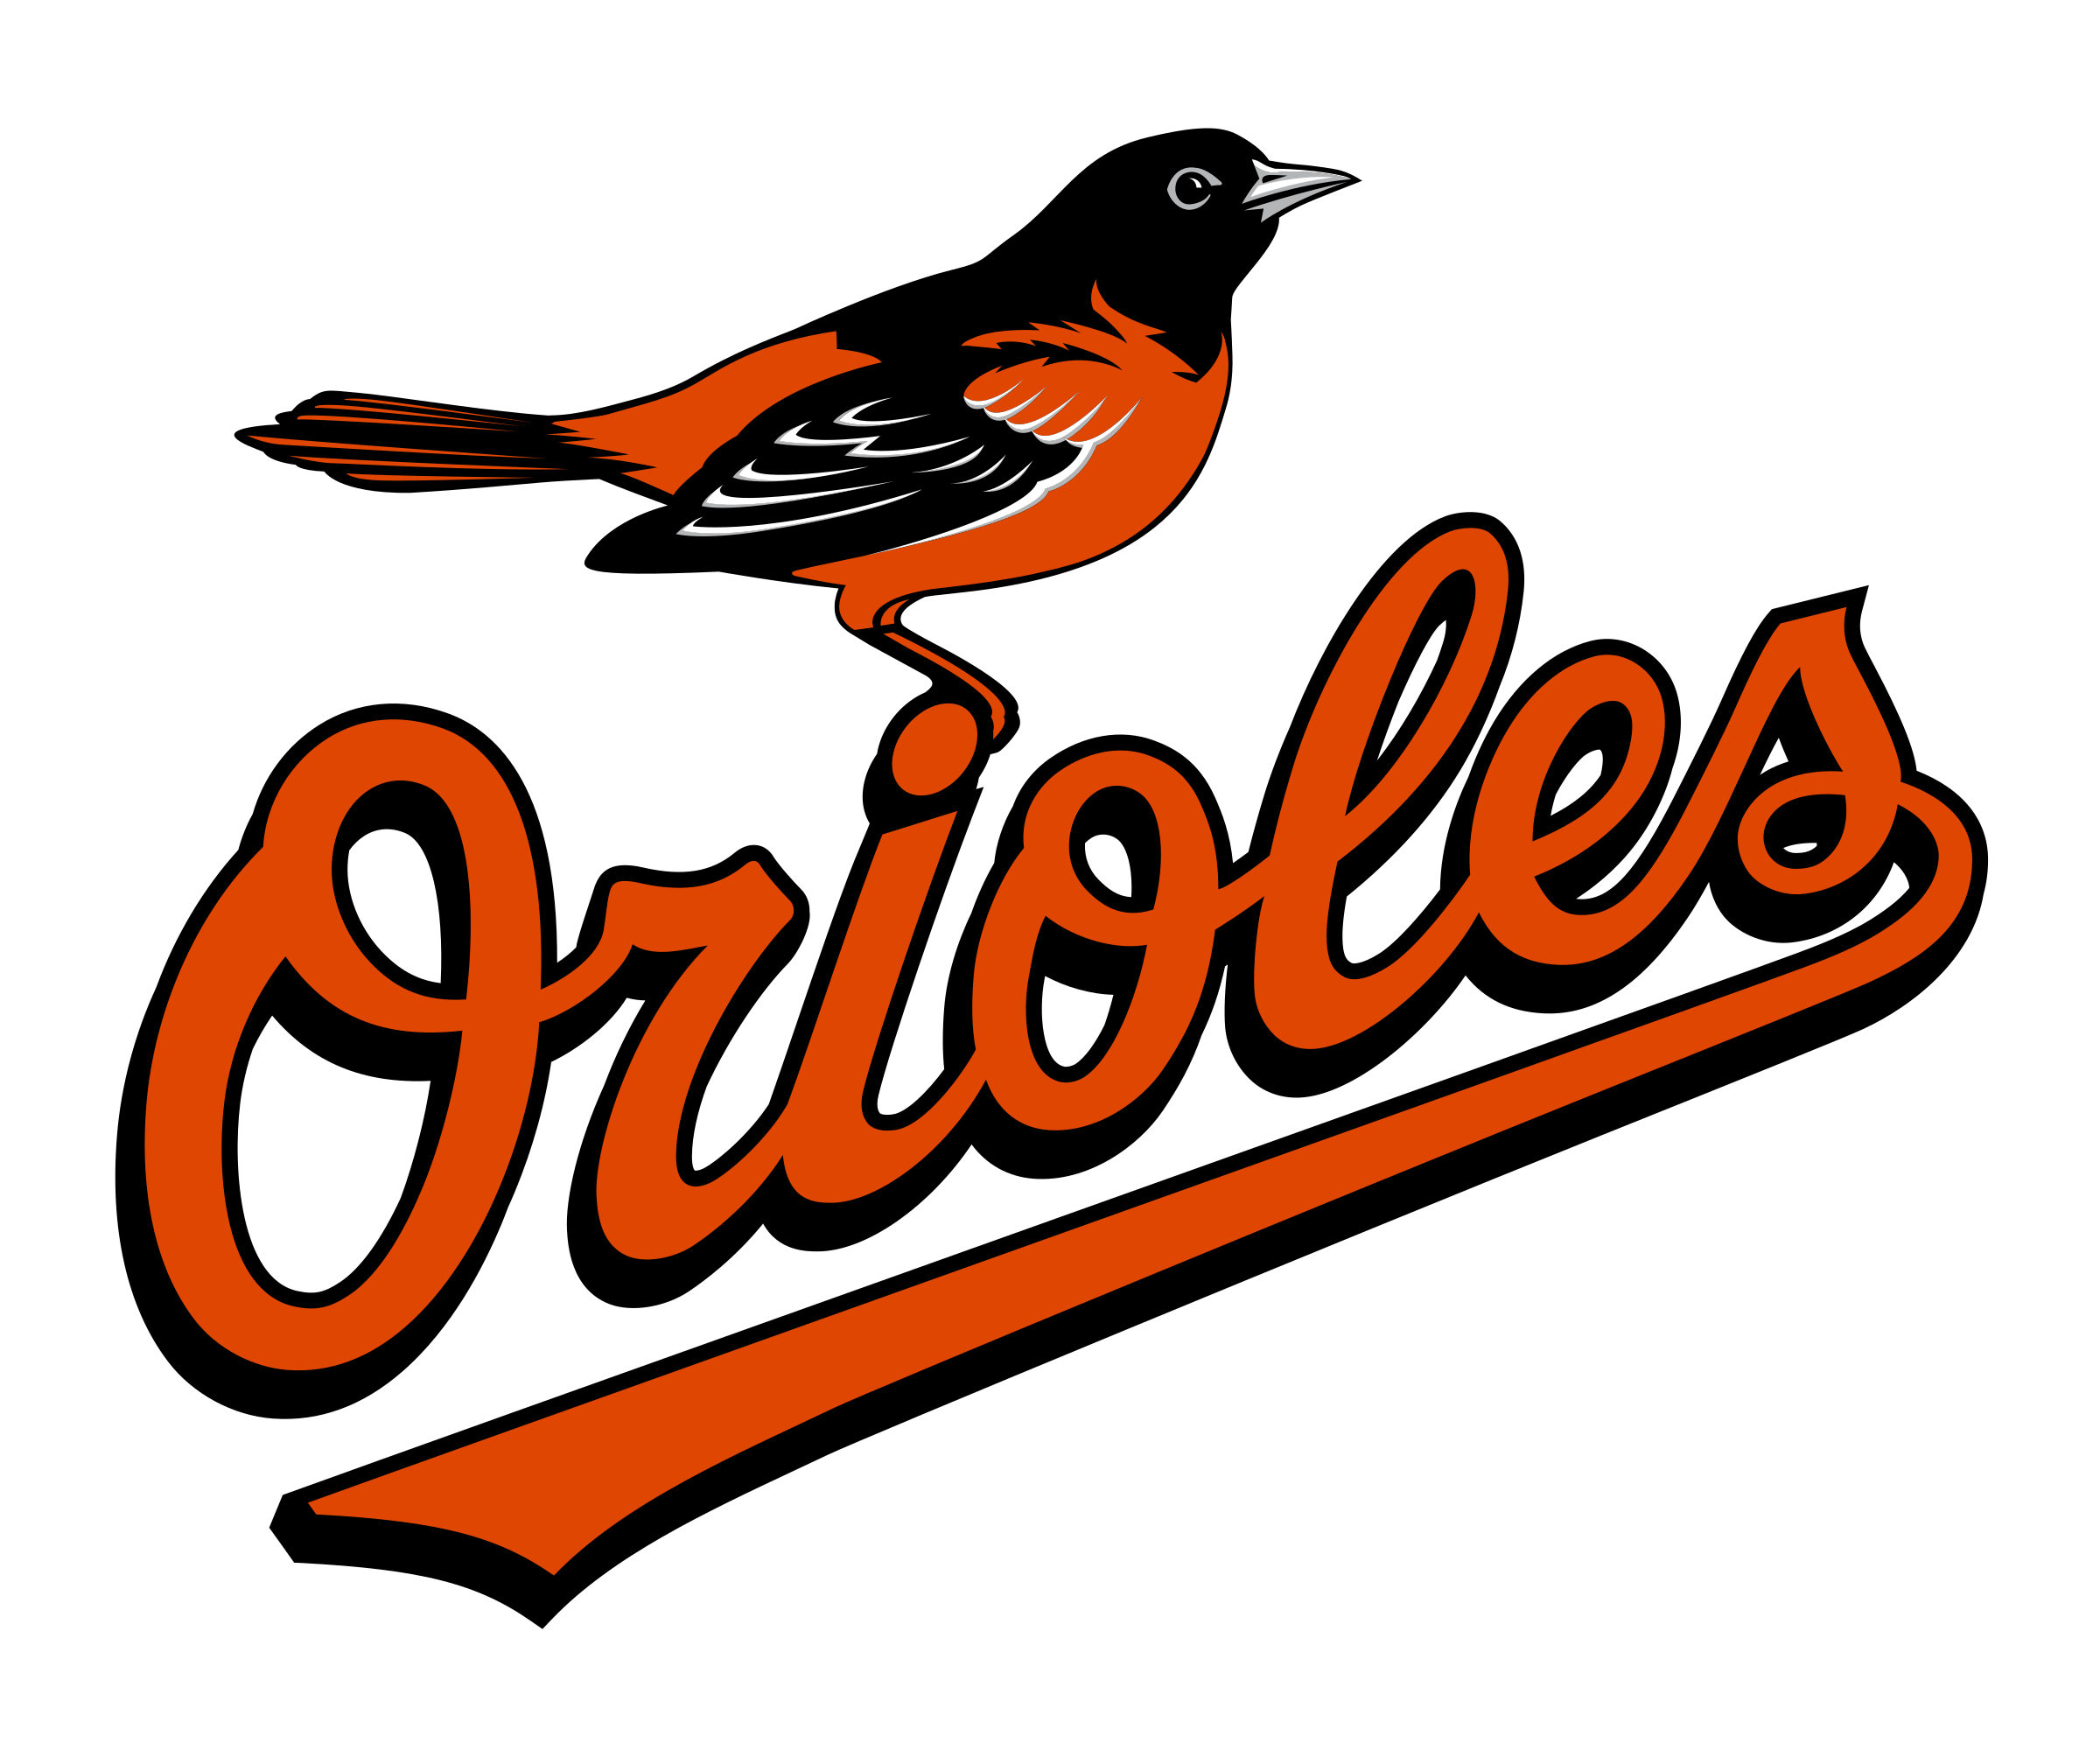 Orieoles Logo - Baltimore Orioles Logo PNG Transparent & SVG Vector - Freebie Supply